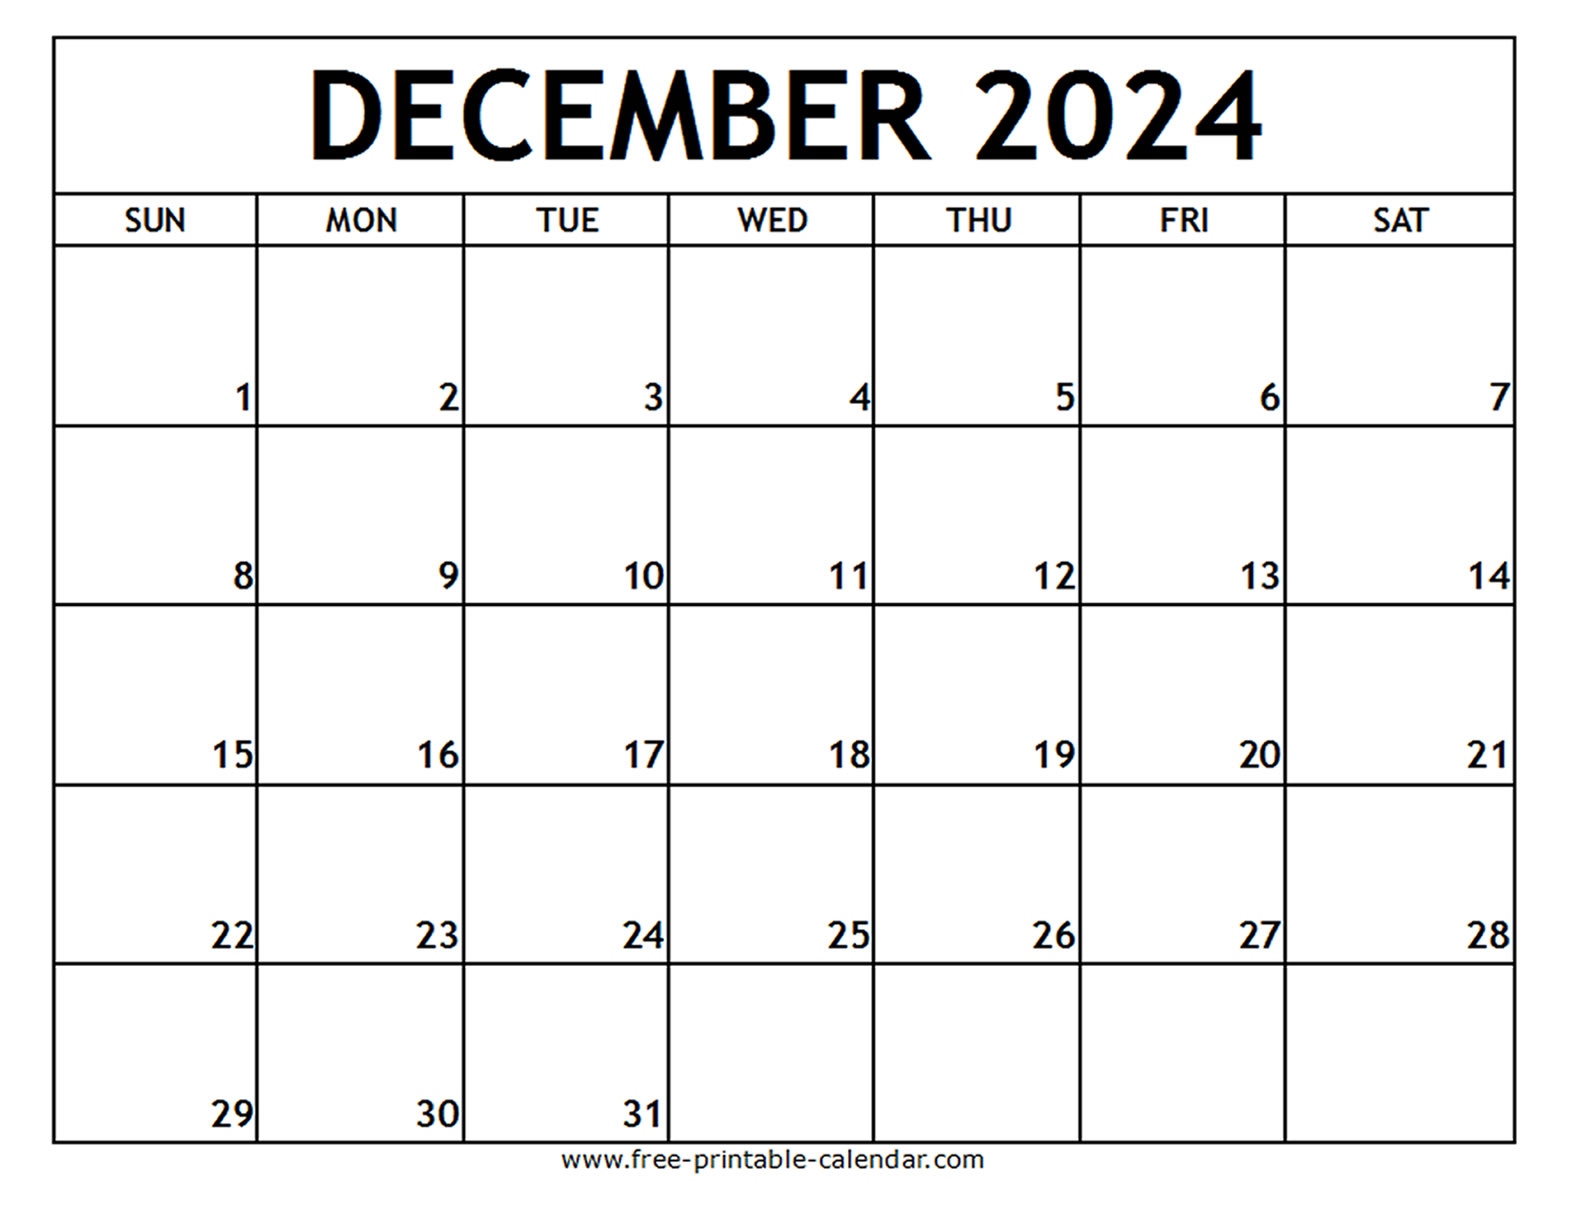 December 2024 Printable Calendar - Free-Printable-Calendar throughout Free Printable Blank December Calendar 2024